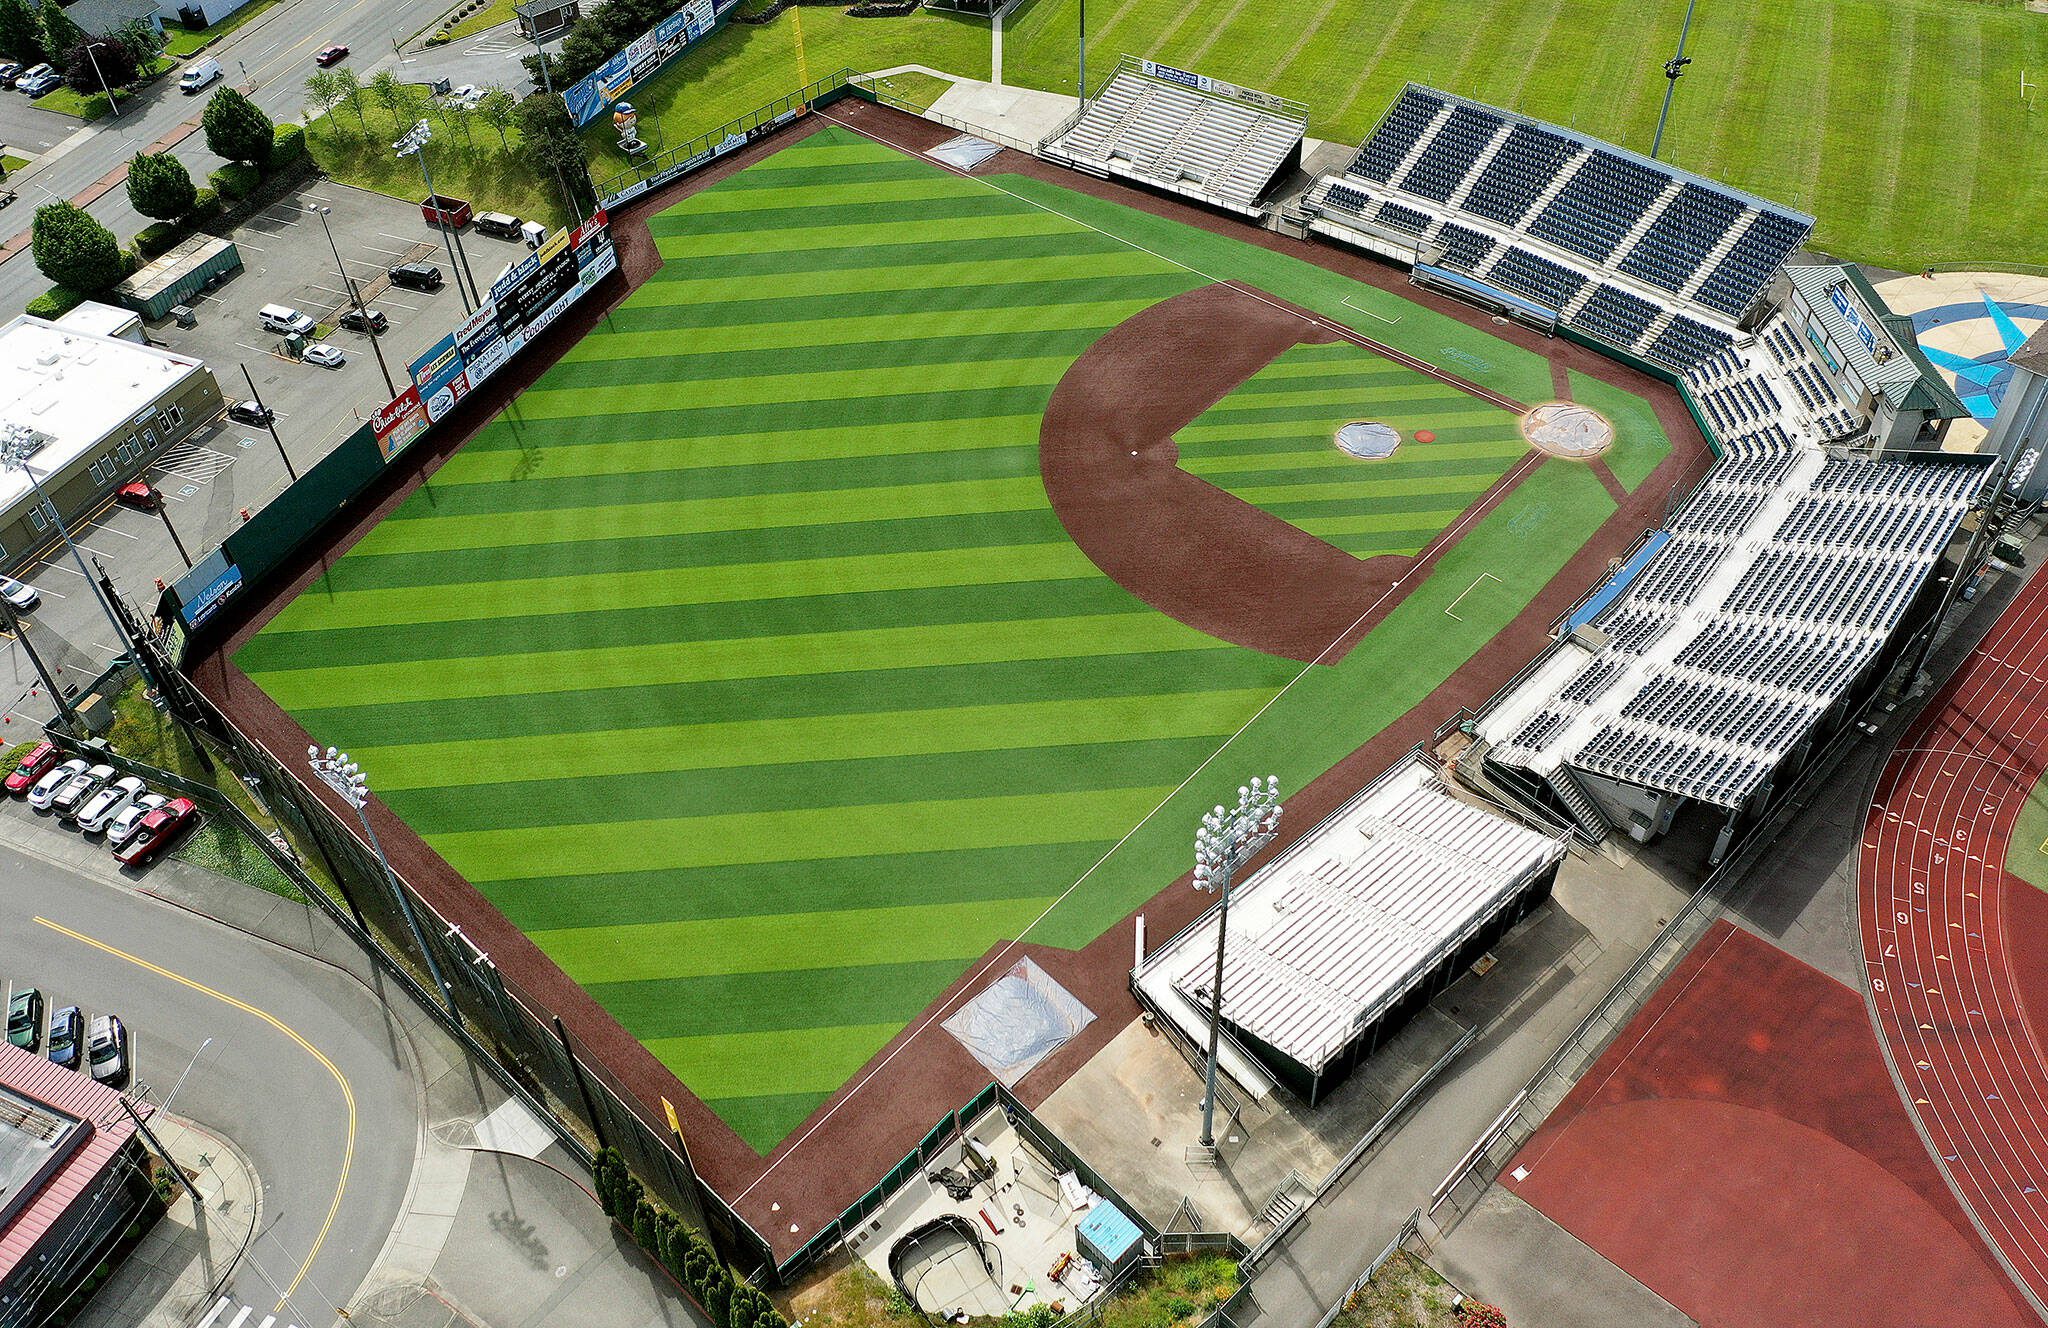 An aerial view of Funko Field at Memorial Stadium in Everett, home of the Everett AquaSox High-A baseball team. (Chuck Taylor / The Herald)